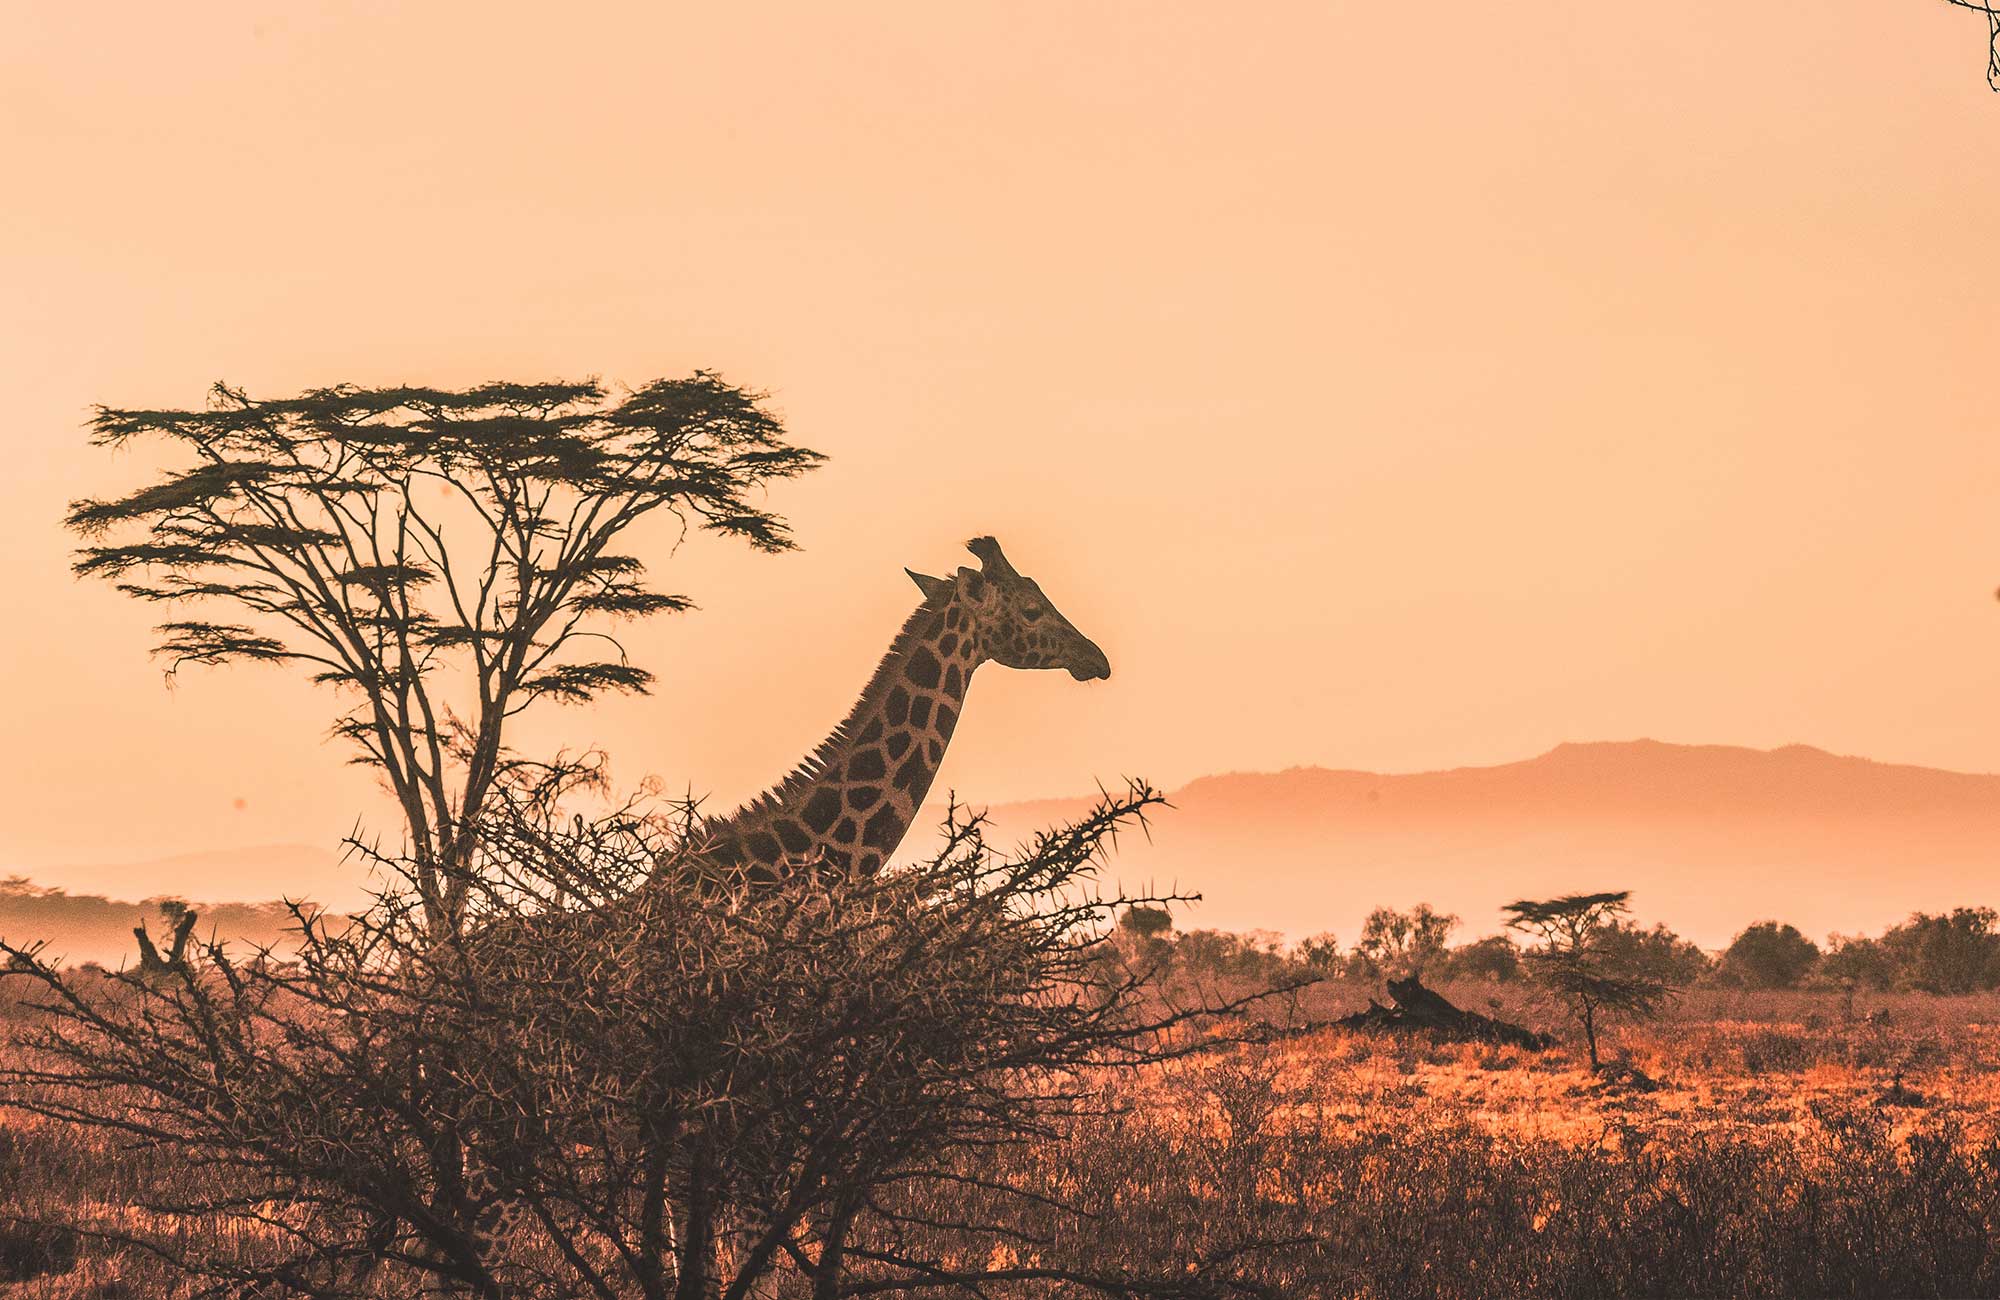 En giraff i solnedgången på safari i Afrika.